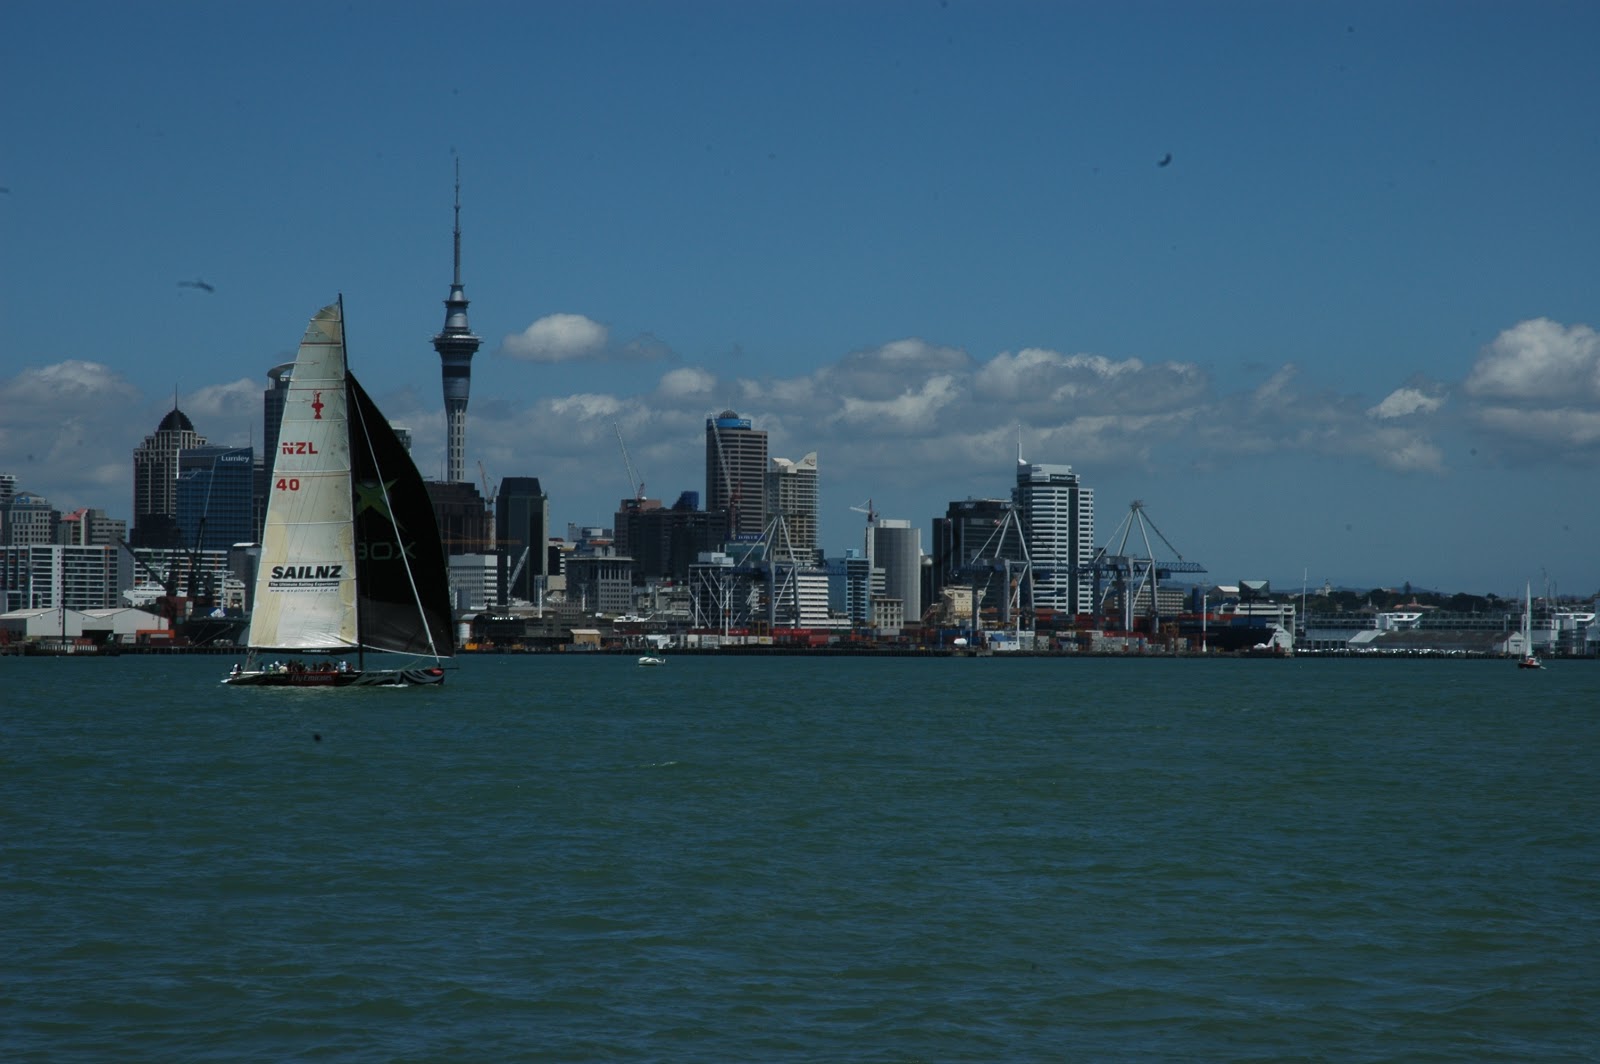 NZL40 vor Auckland Harbor